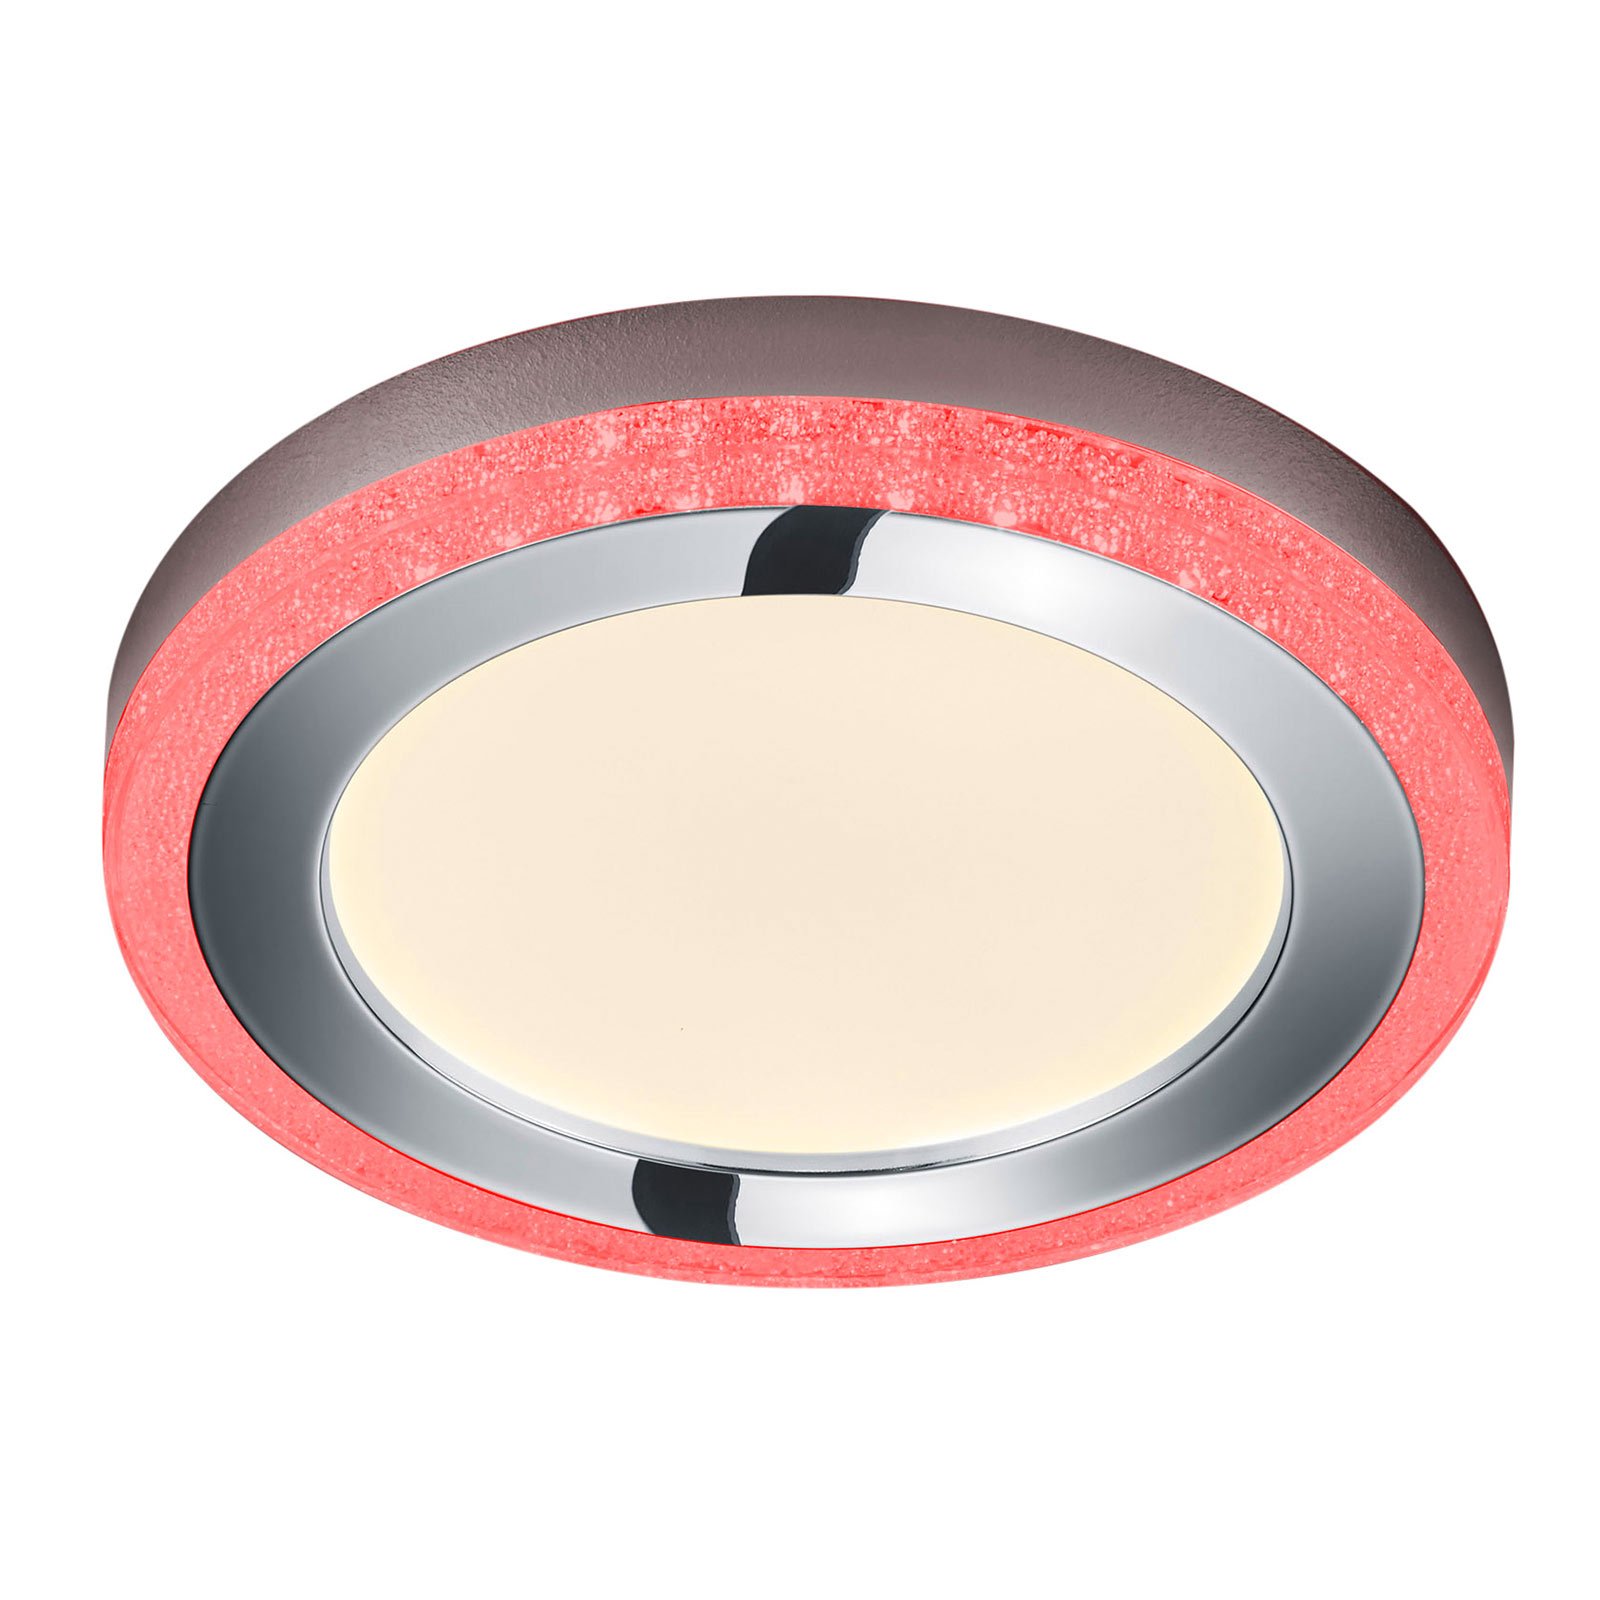 Stropna svetilka LED Slide, bela, okrogla, Ø 40 cm